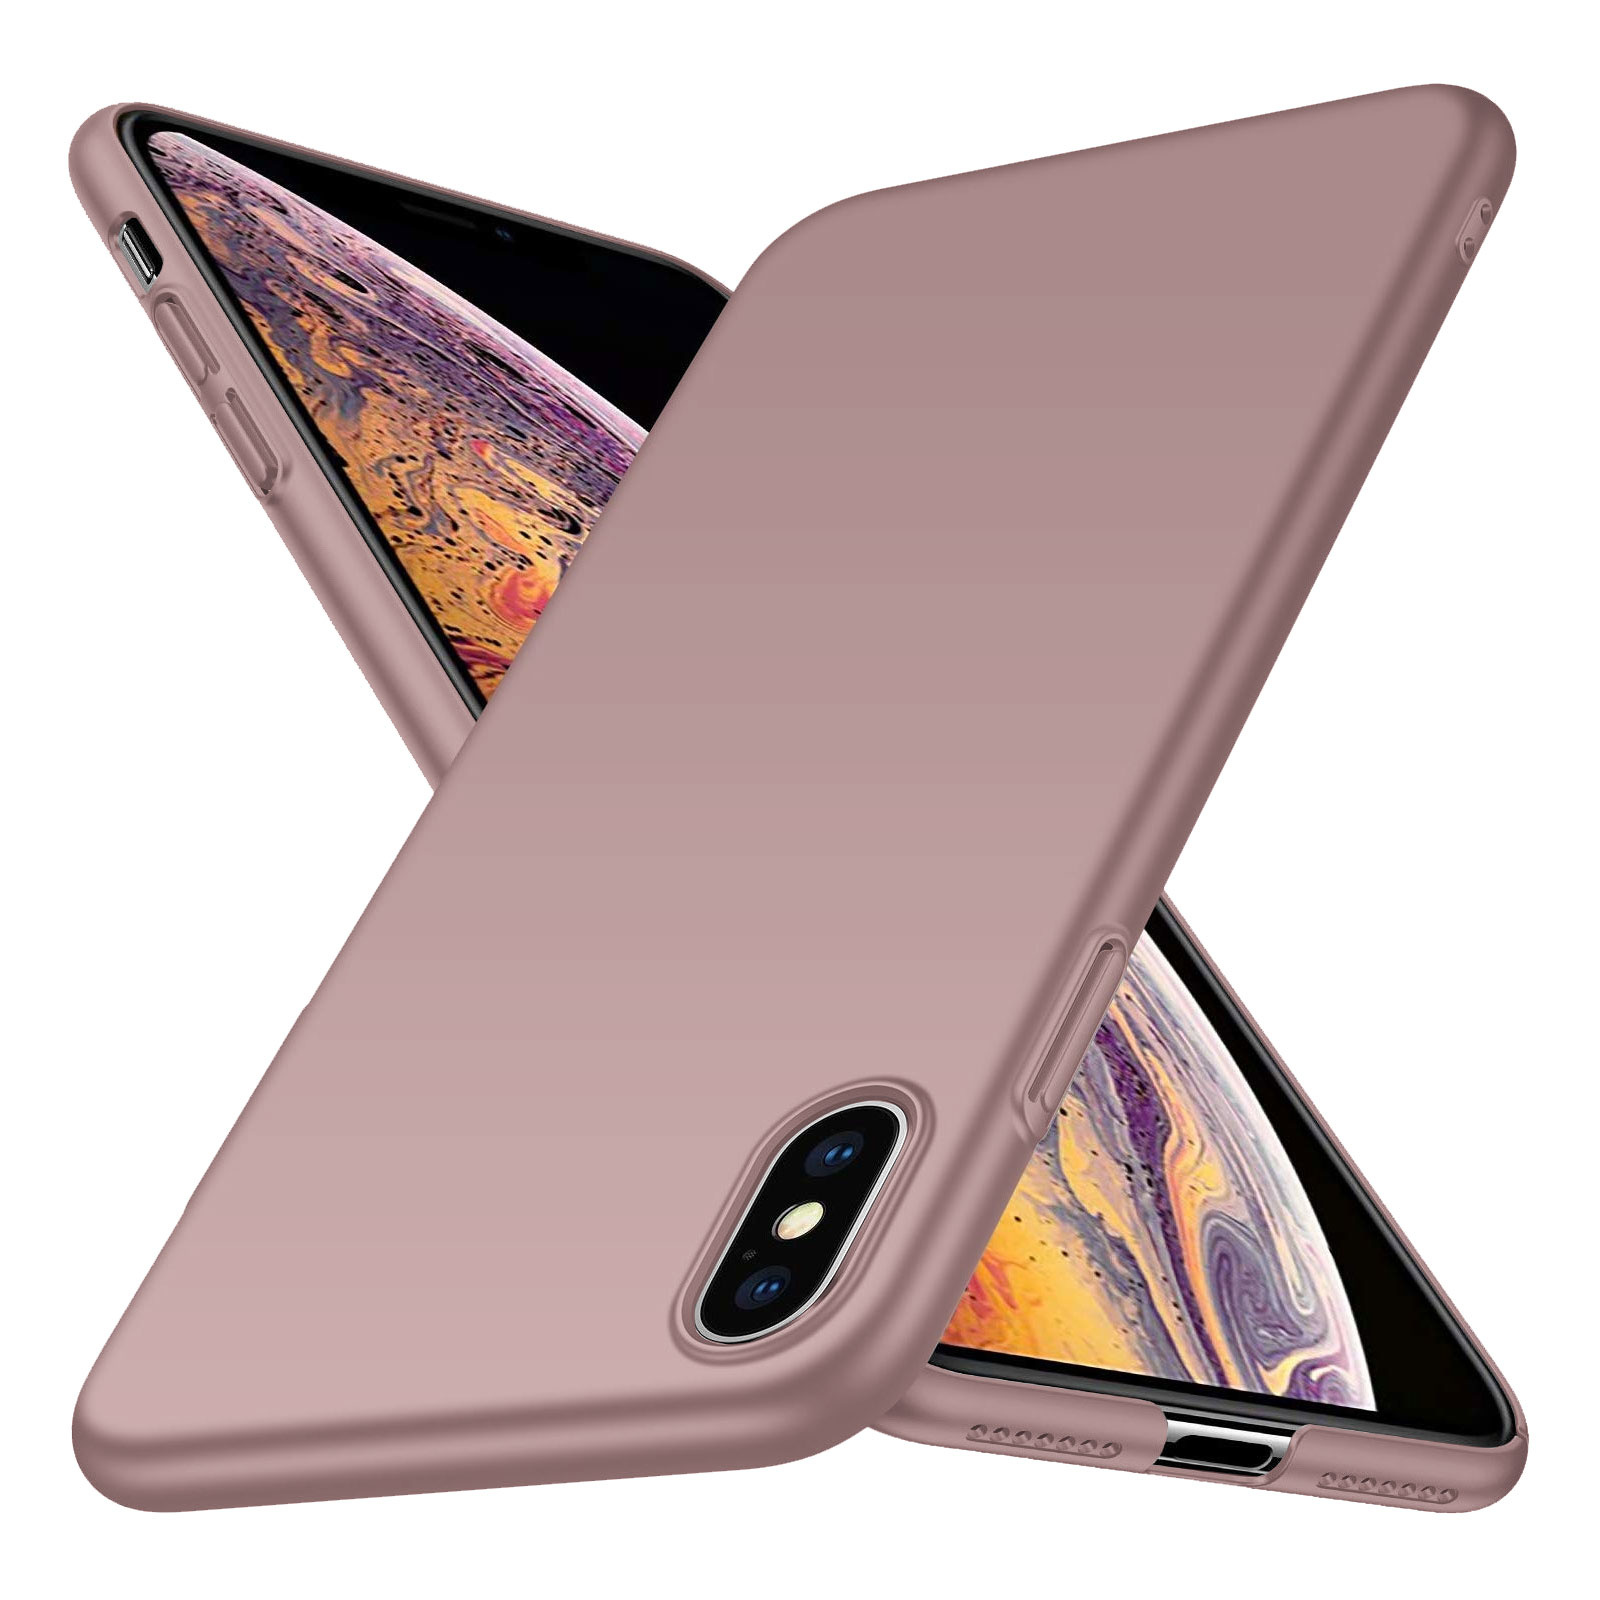 Worden Touhou gelei Back Case Cover iPhone Xs Max Hoesje Pink Powder - Geeektech.com